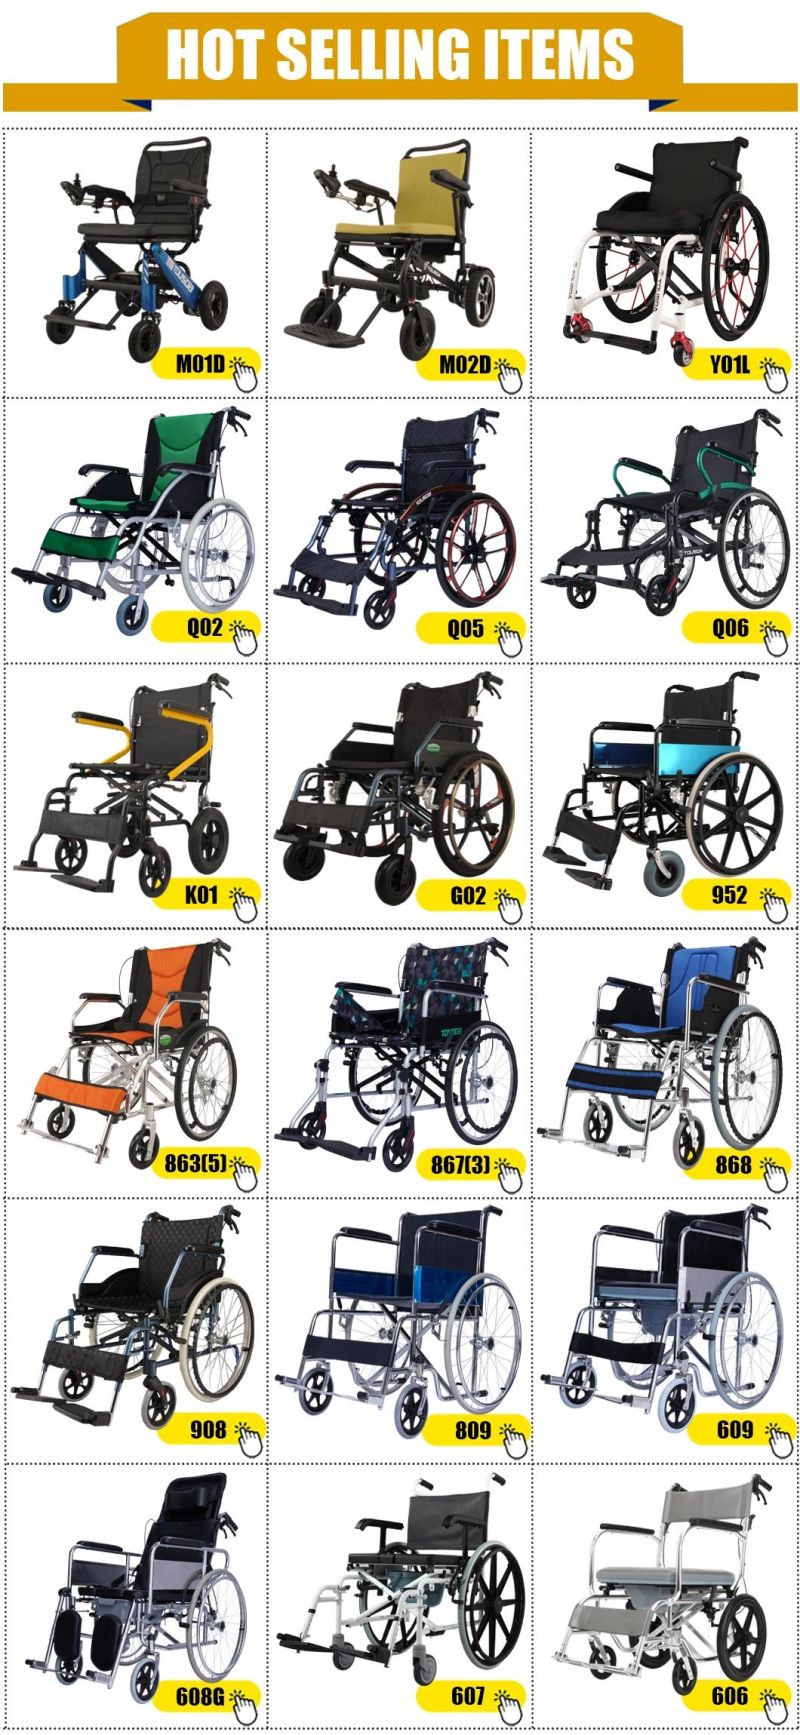 Lift Folding Basketball Disabled Power Wheelchair